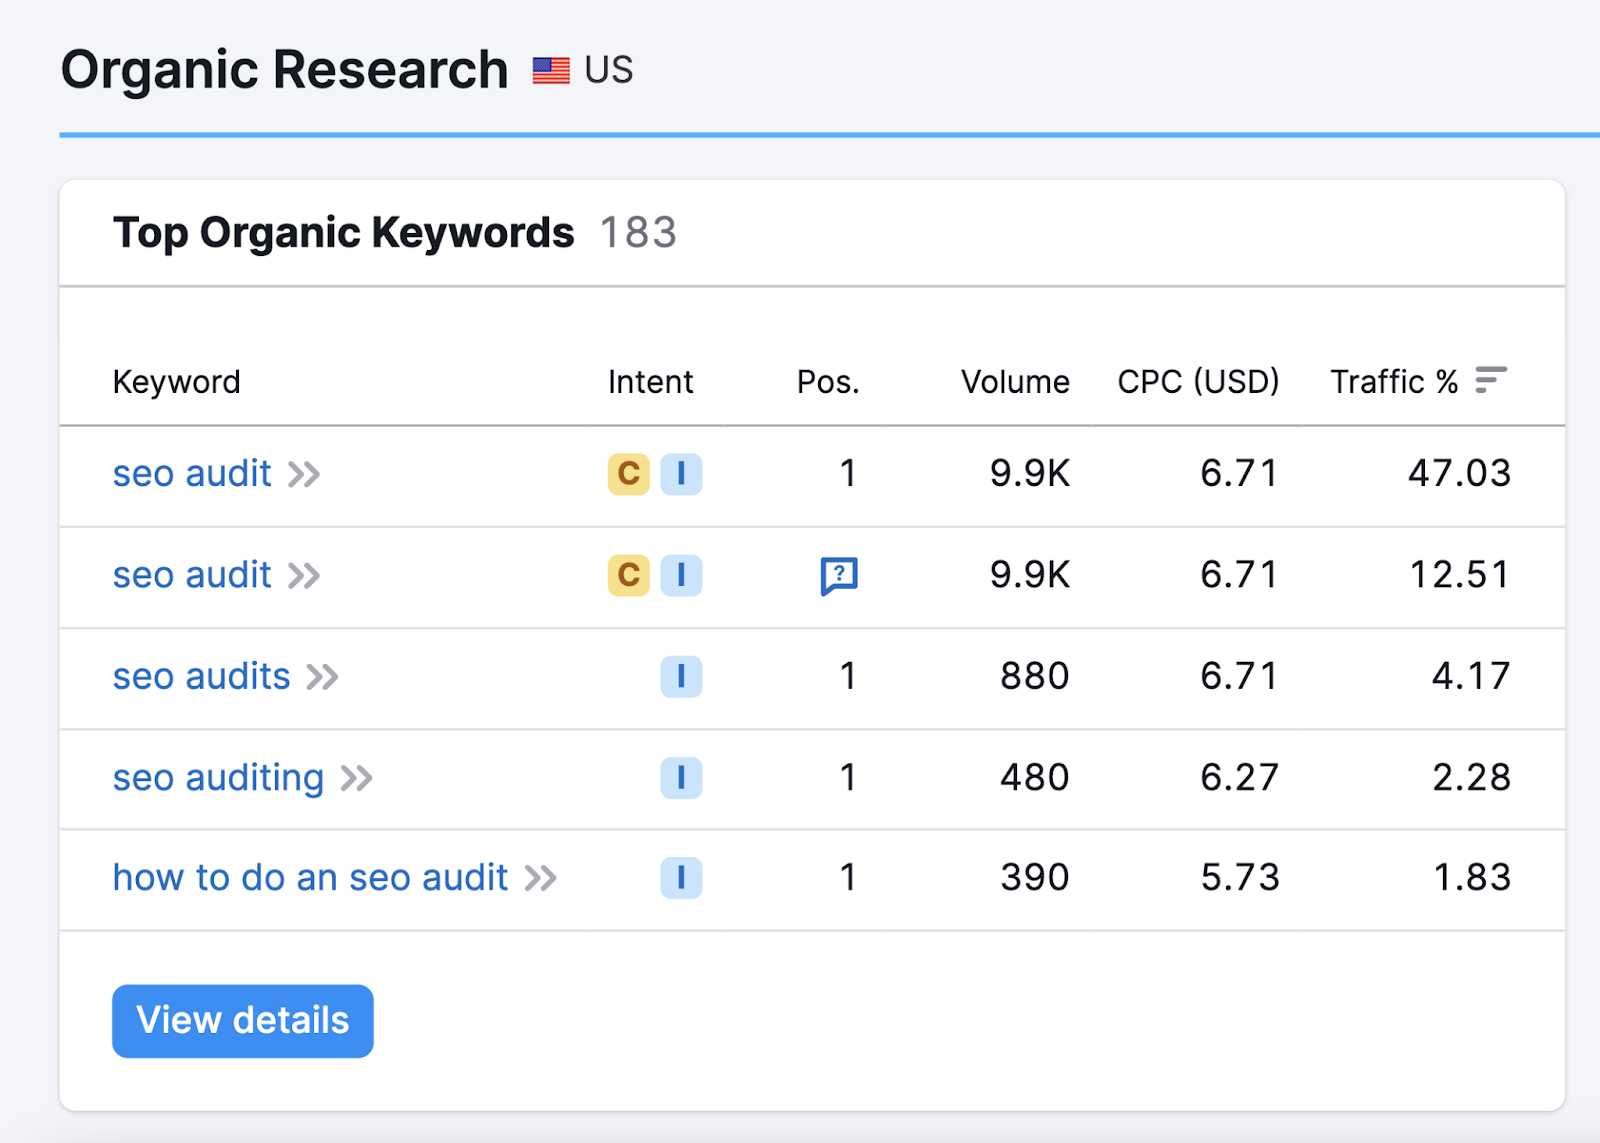 Semrush blog station  connected  SEO audits ranks for 183 keywords